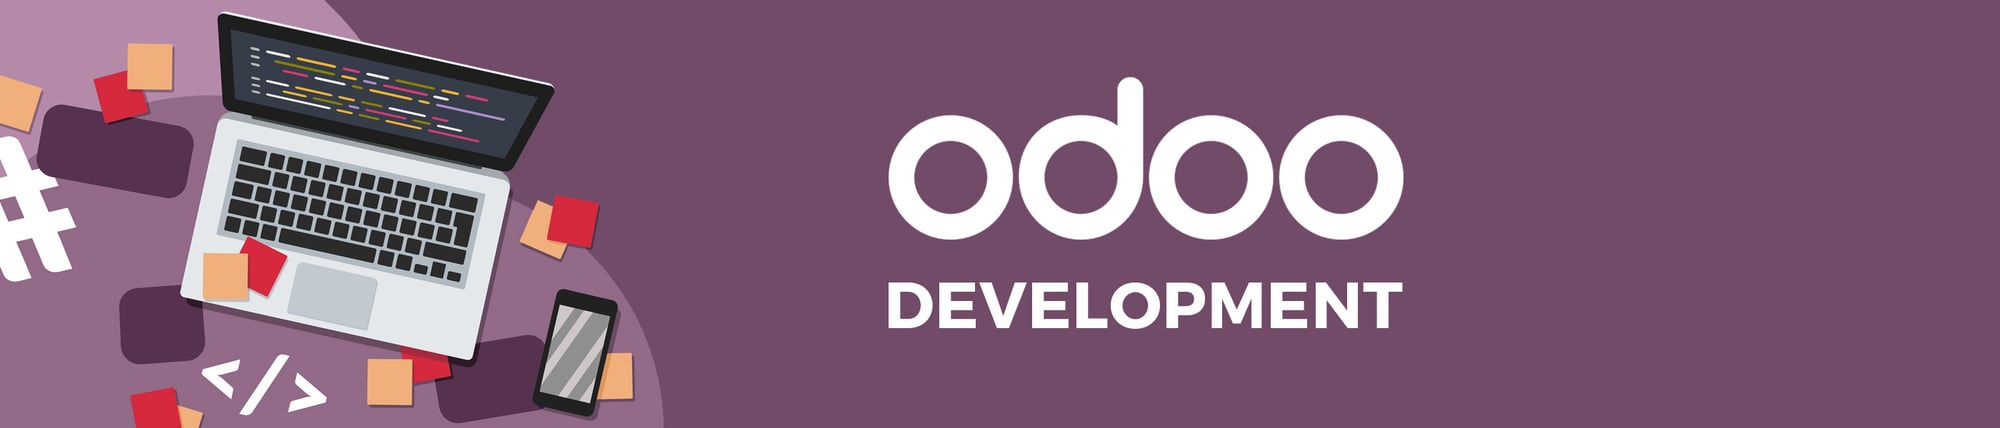 Odoo Entwicklung | W4 Marketing & IT